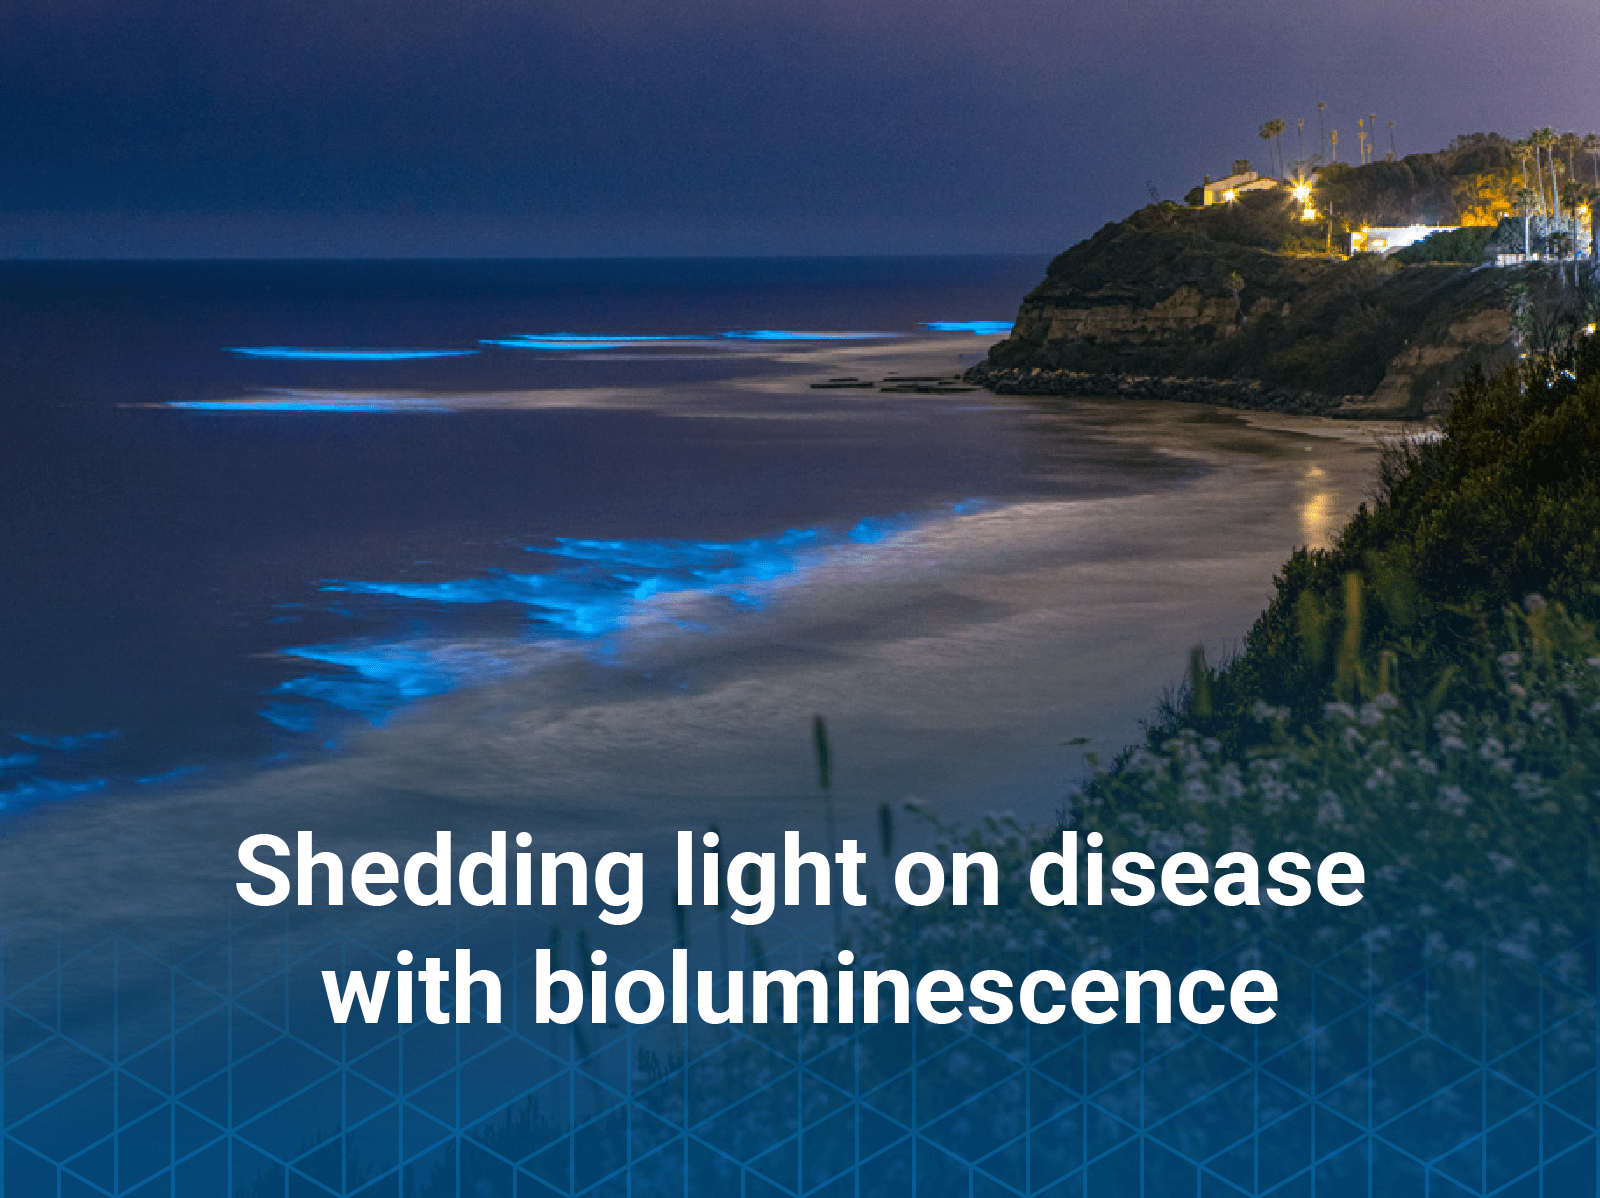 Bioluminescent algae visible in coastal surf with Shedding light on disease with bioluminescence text overlaid